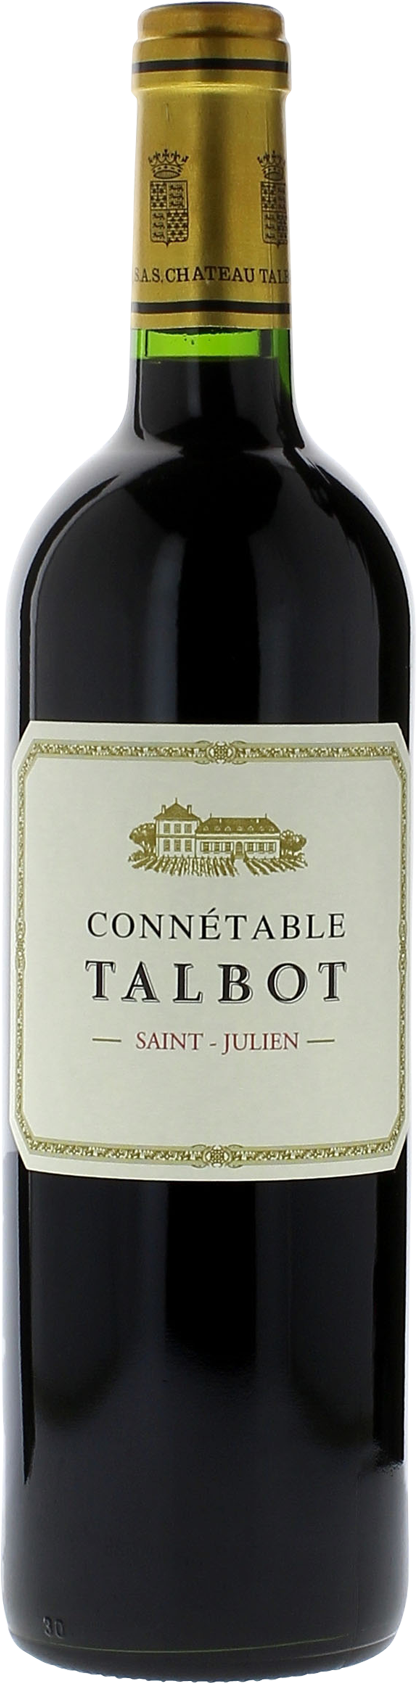 Connetable Talbot 2009